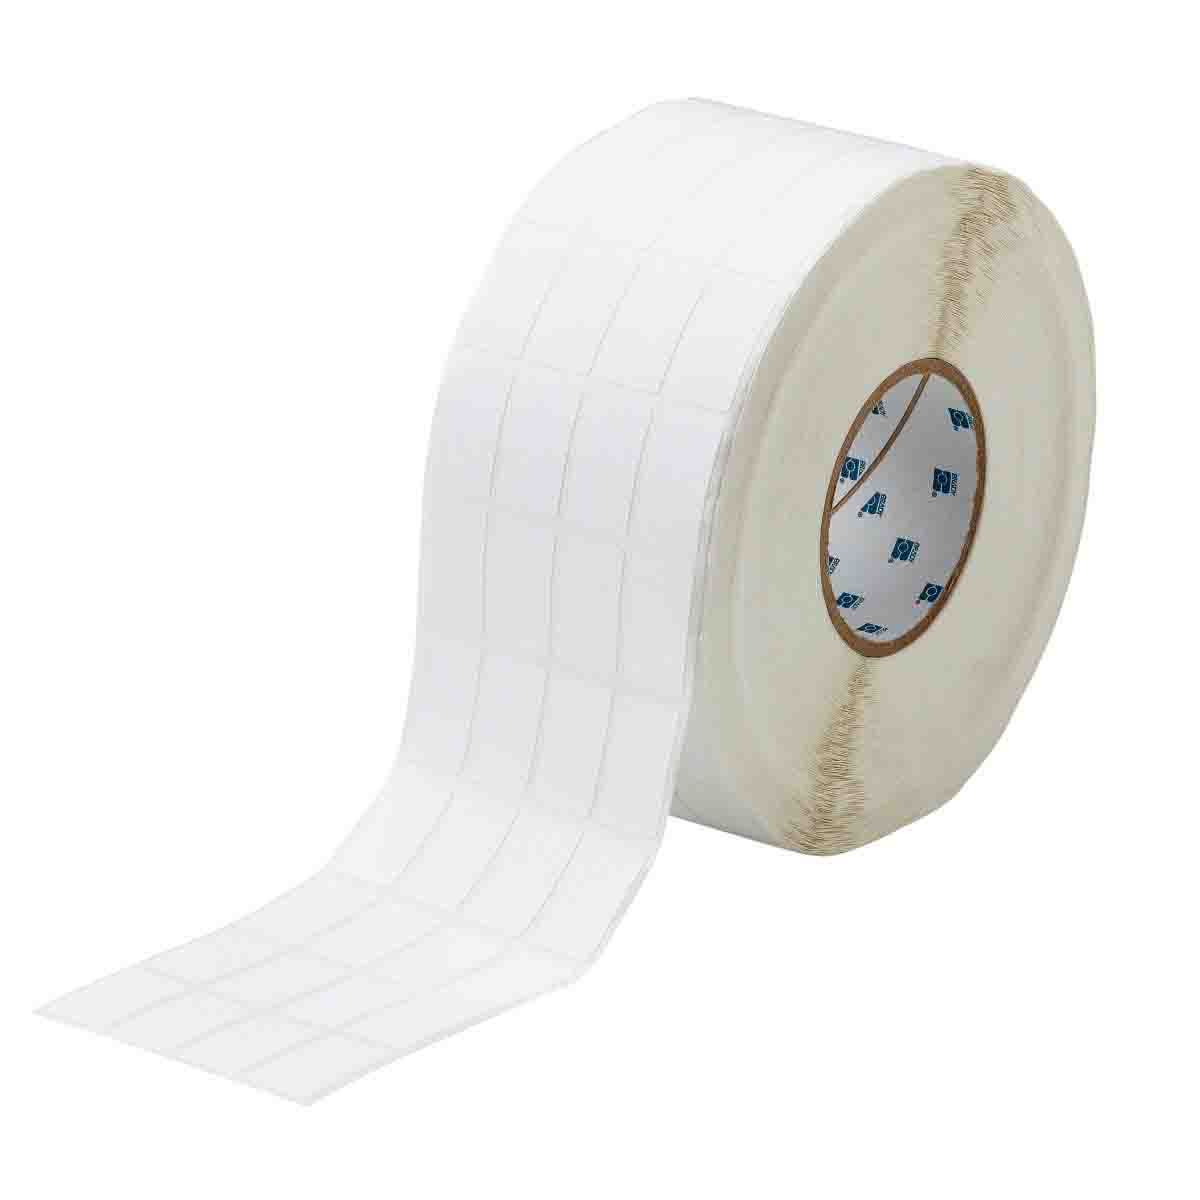 B-499 Nylon Cloth Matte Finish White Thermal Transfer Printable Label Brady THT-152-499-3 0.375 Width x 1 Height 3000 per Roll 